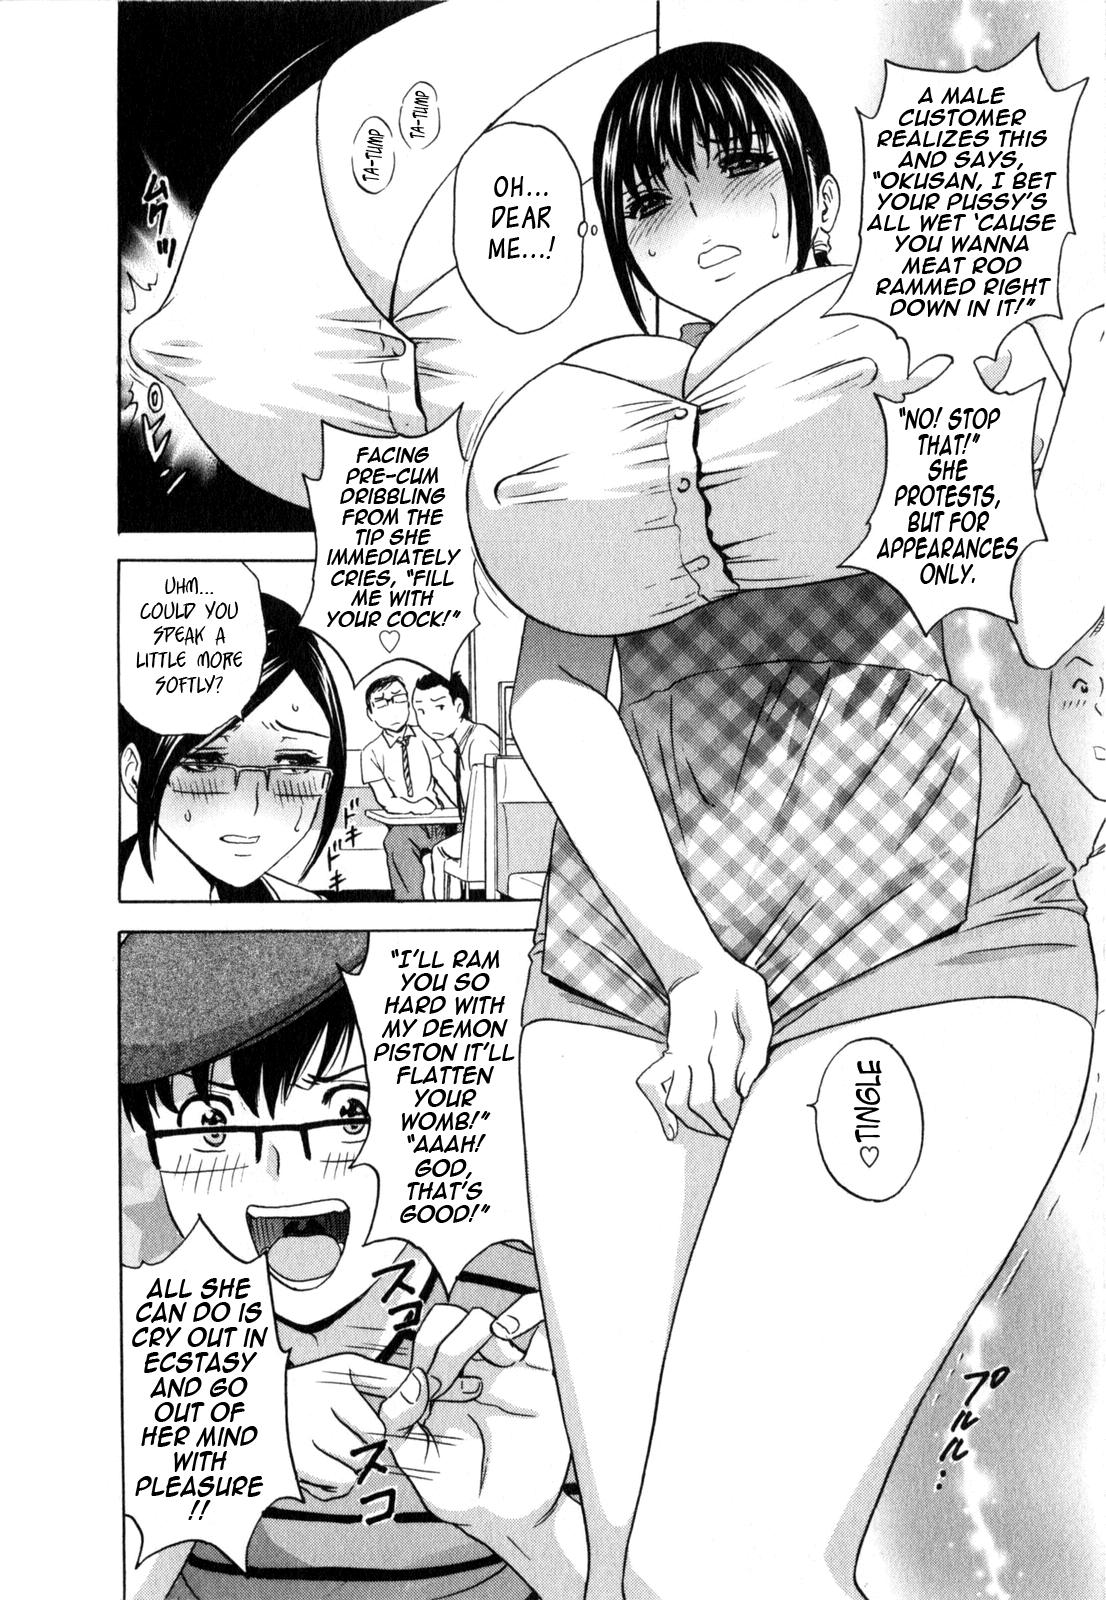 [Hidemaru] Life with Married Women Just Like a Manga 2 - Ch. 1-6 [English] {Tadanohito} 110